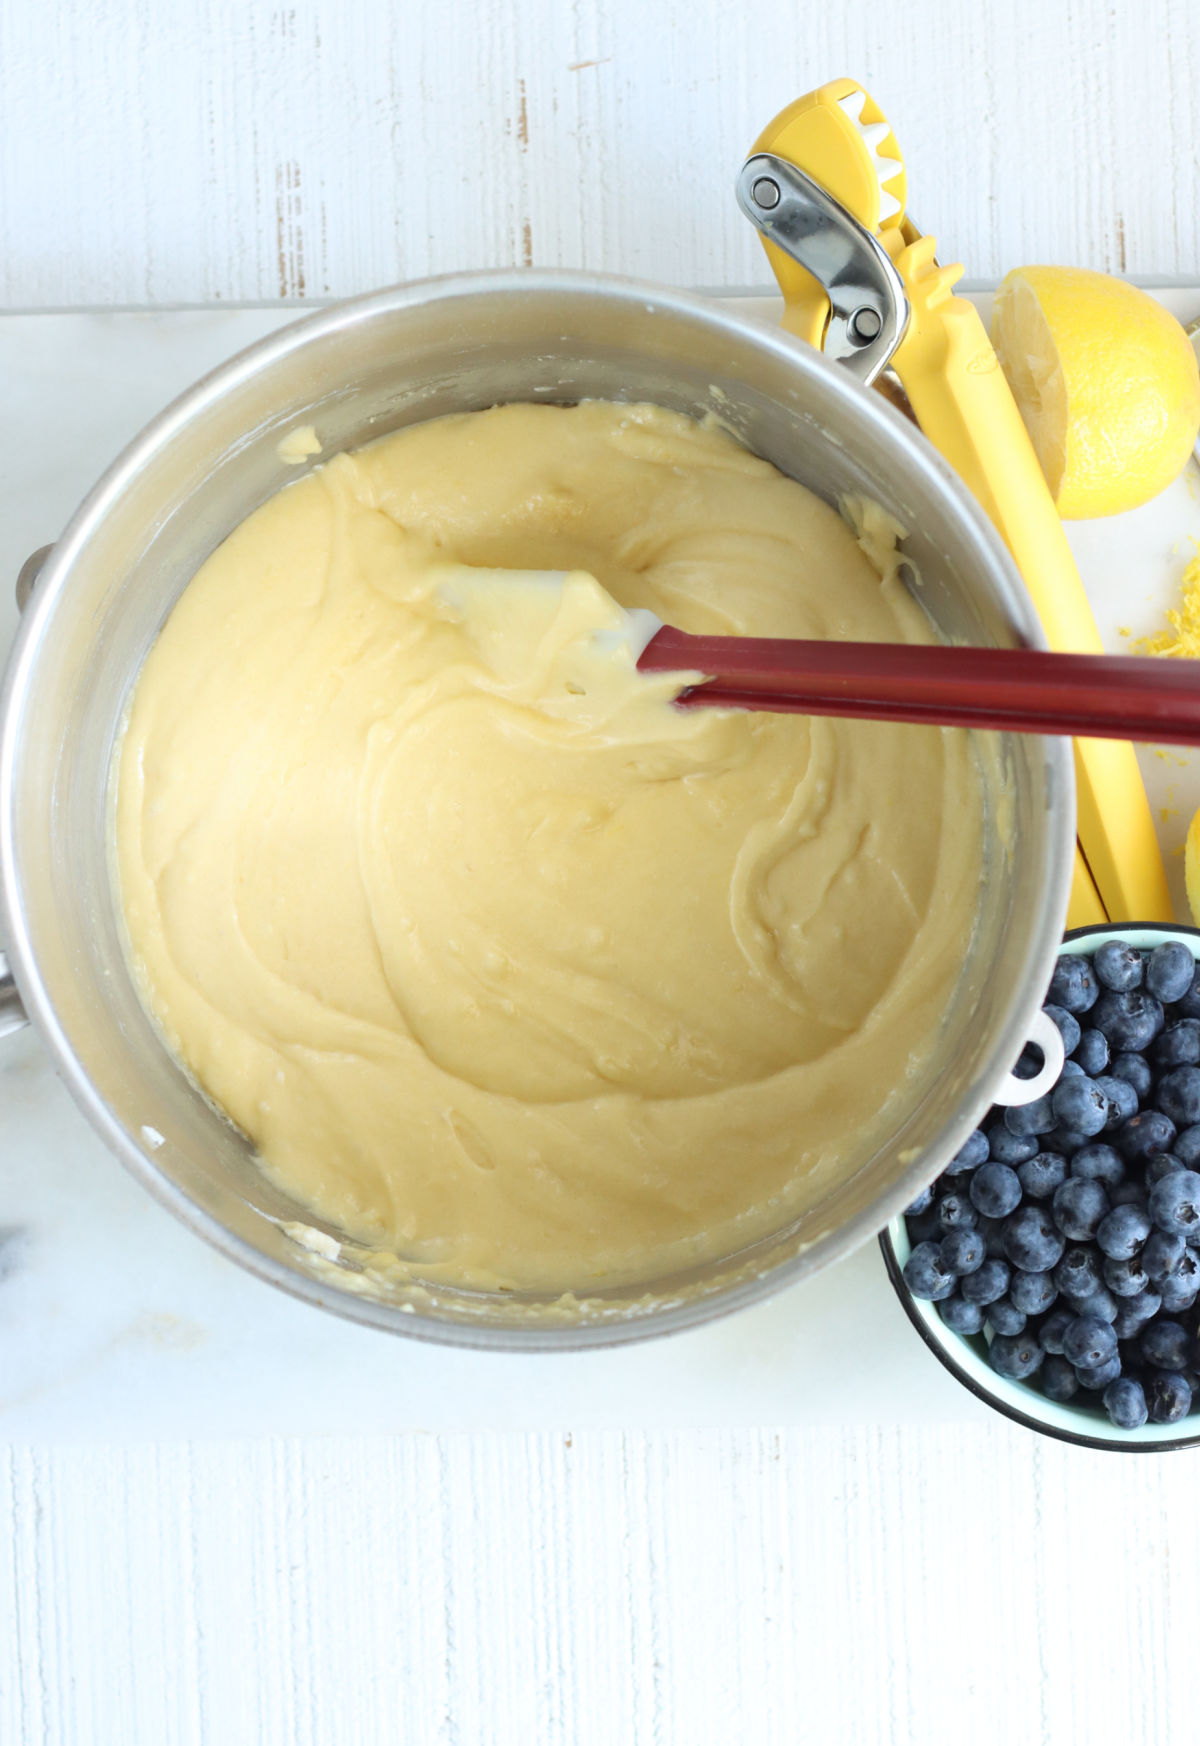 Lemon cake batter in metal mixing bowl, bowl of blueberries to right.